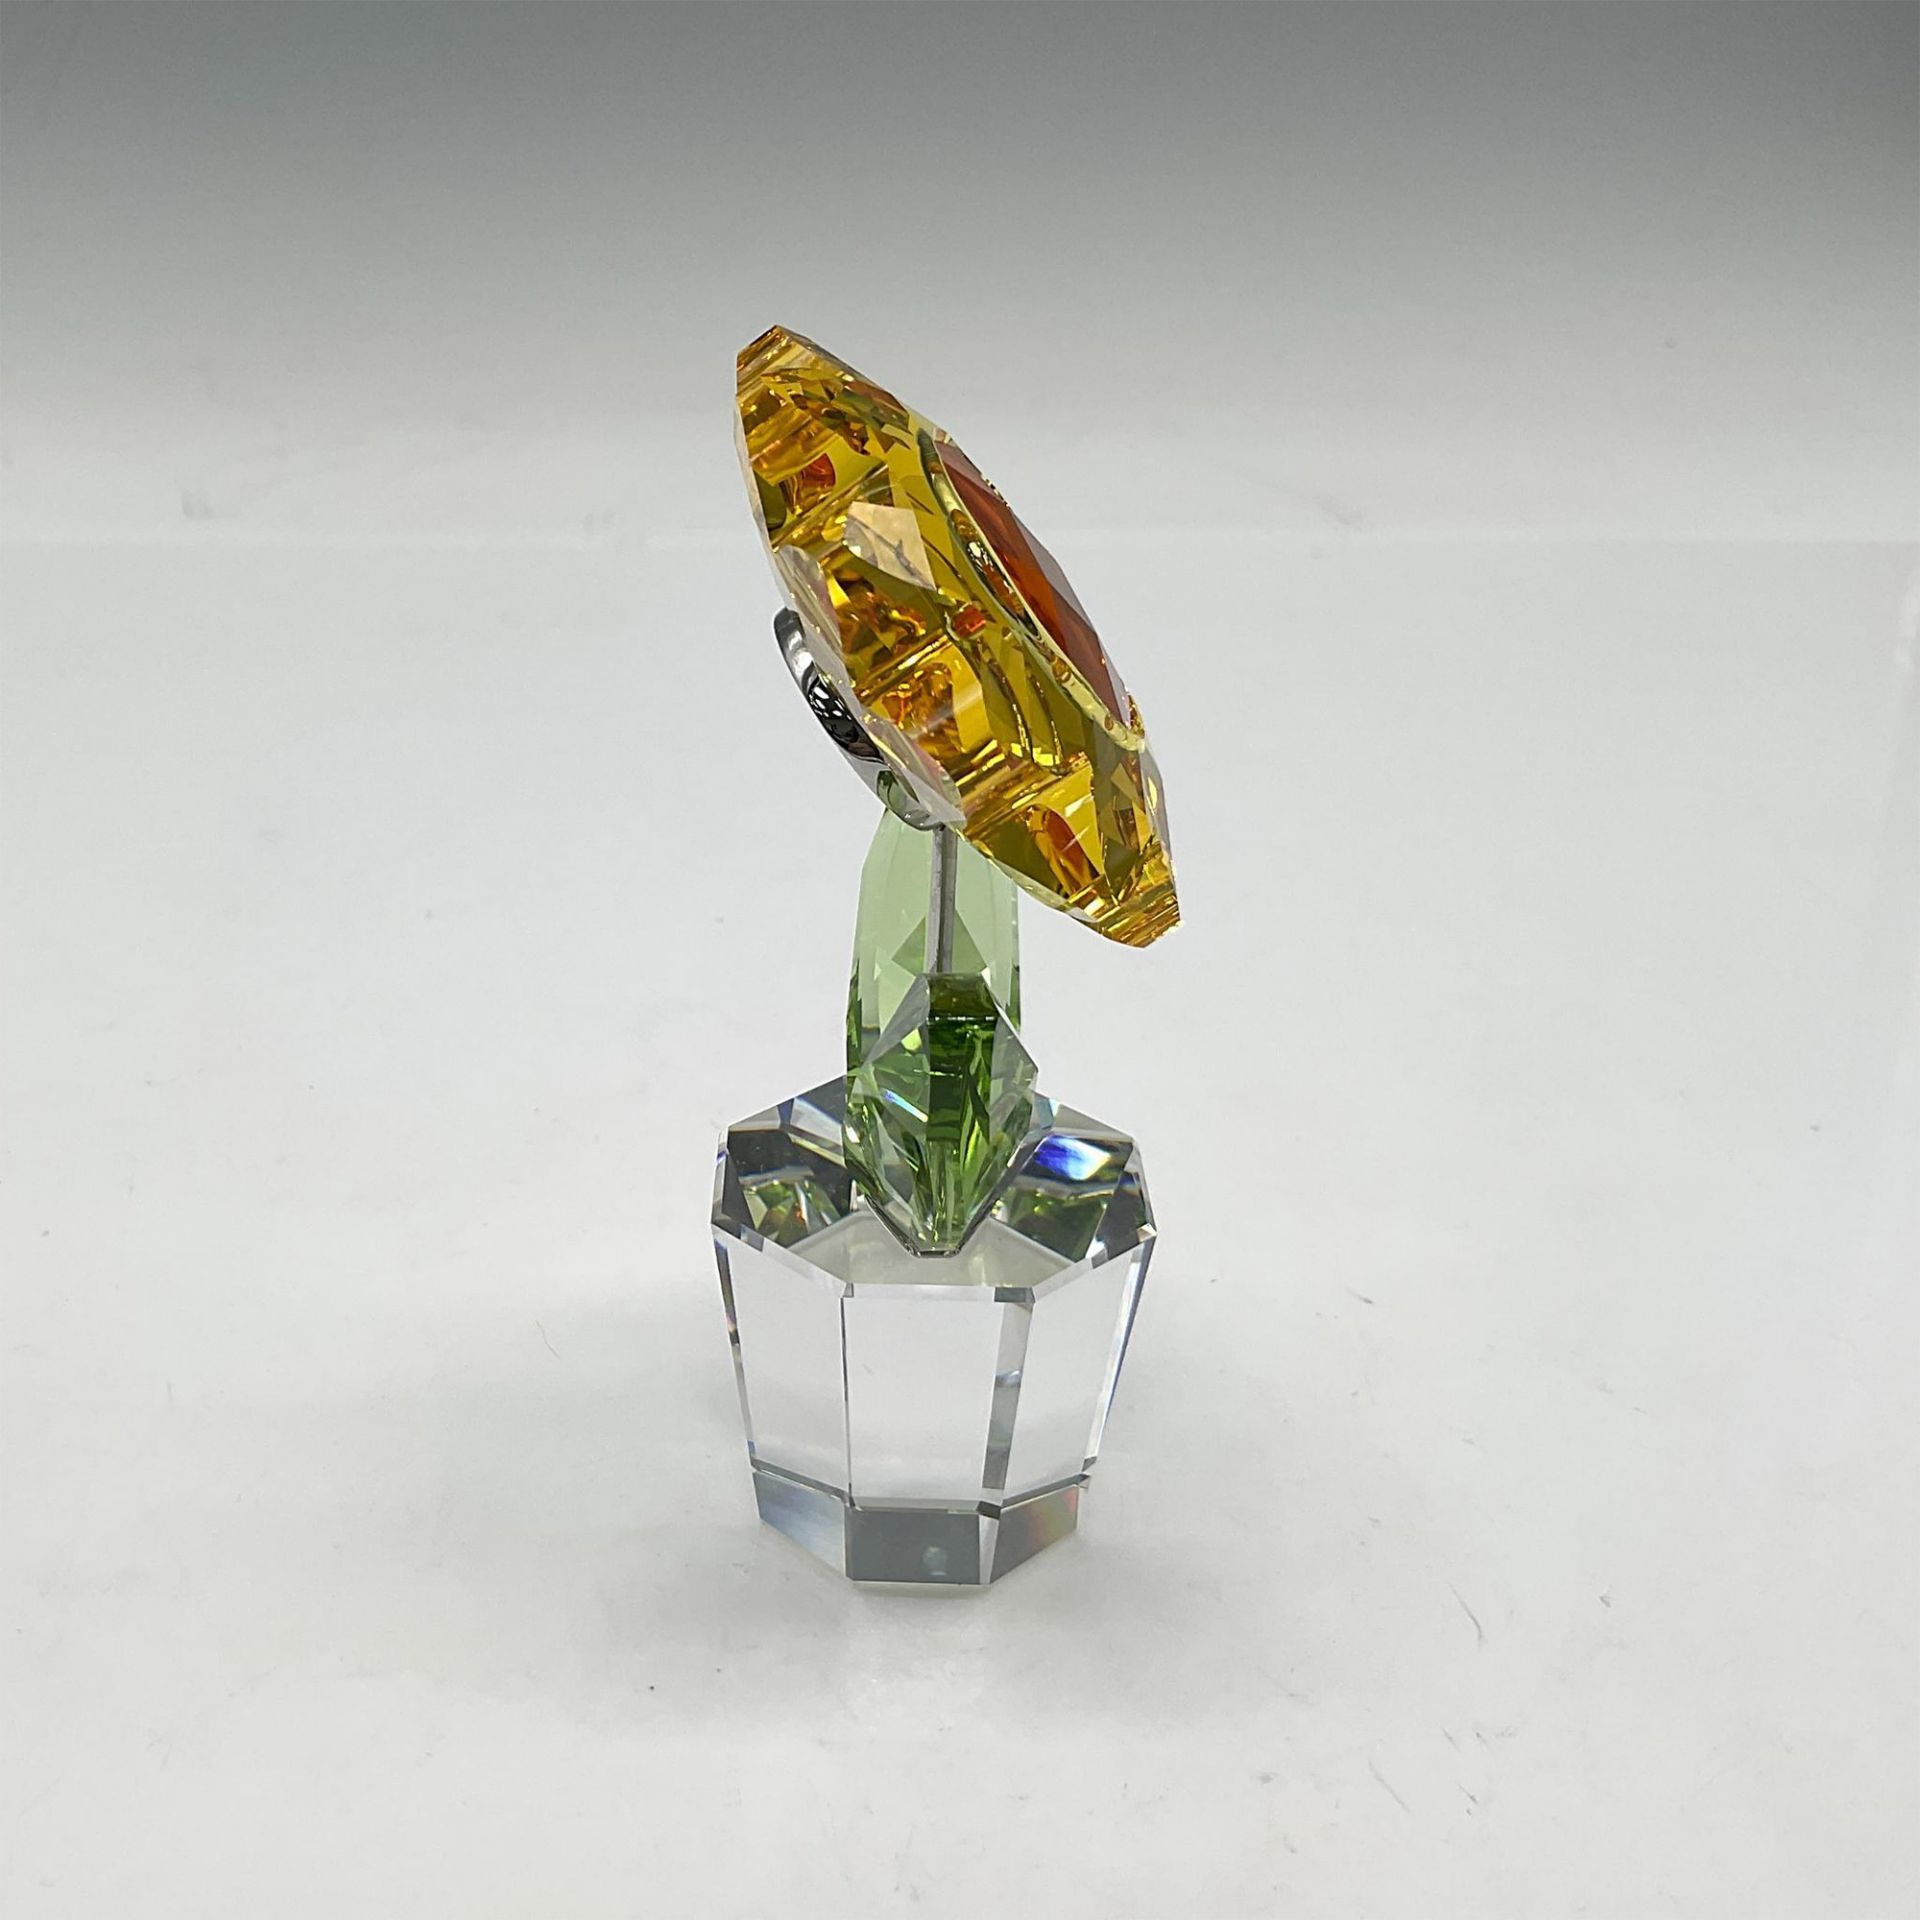 Swarovski Crystal Figurine, Sunflower Medium - Image 2 of 3